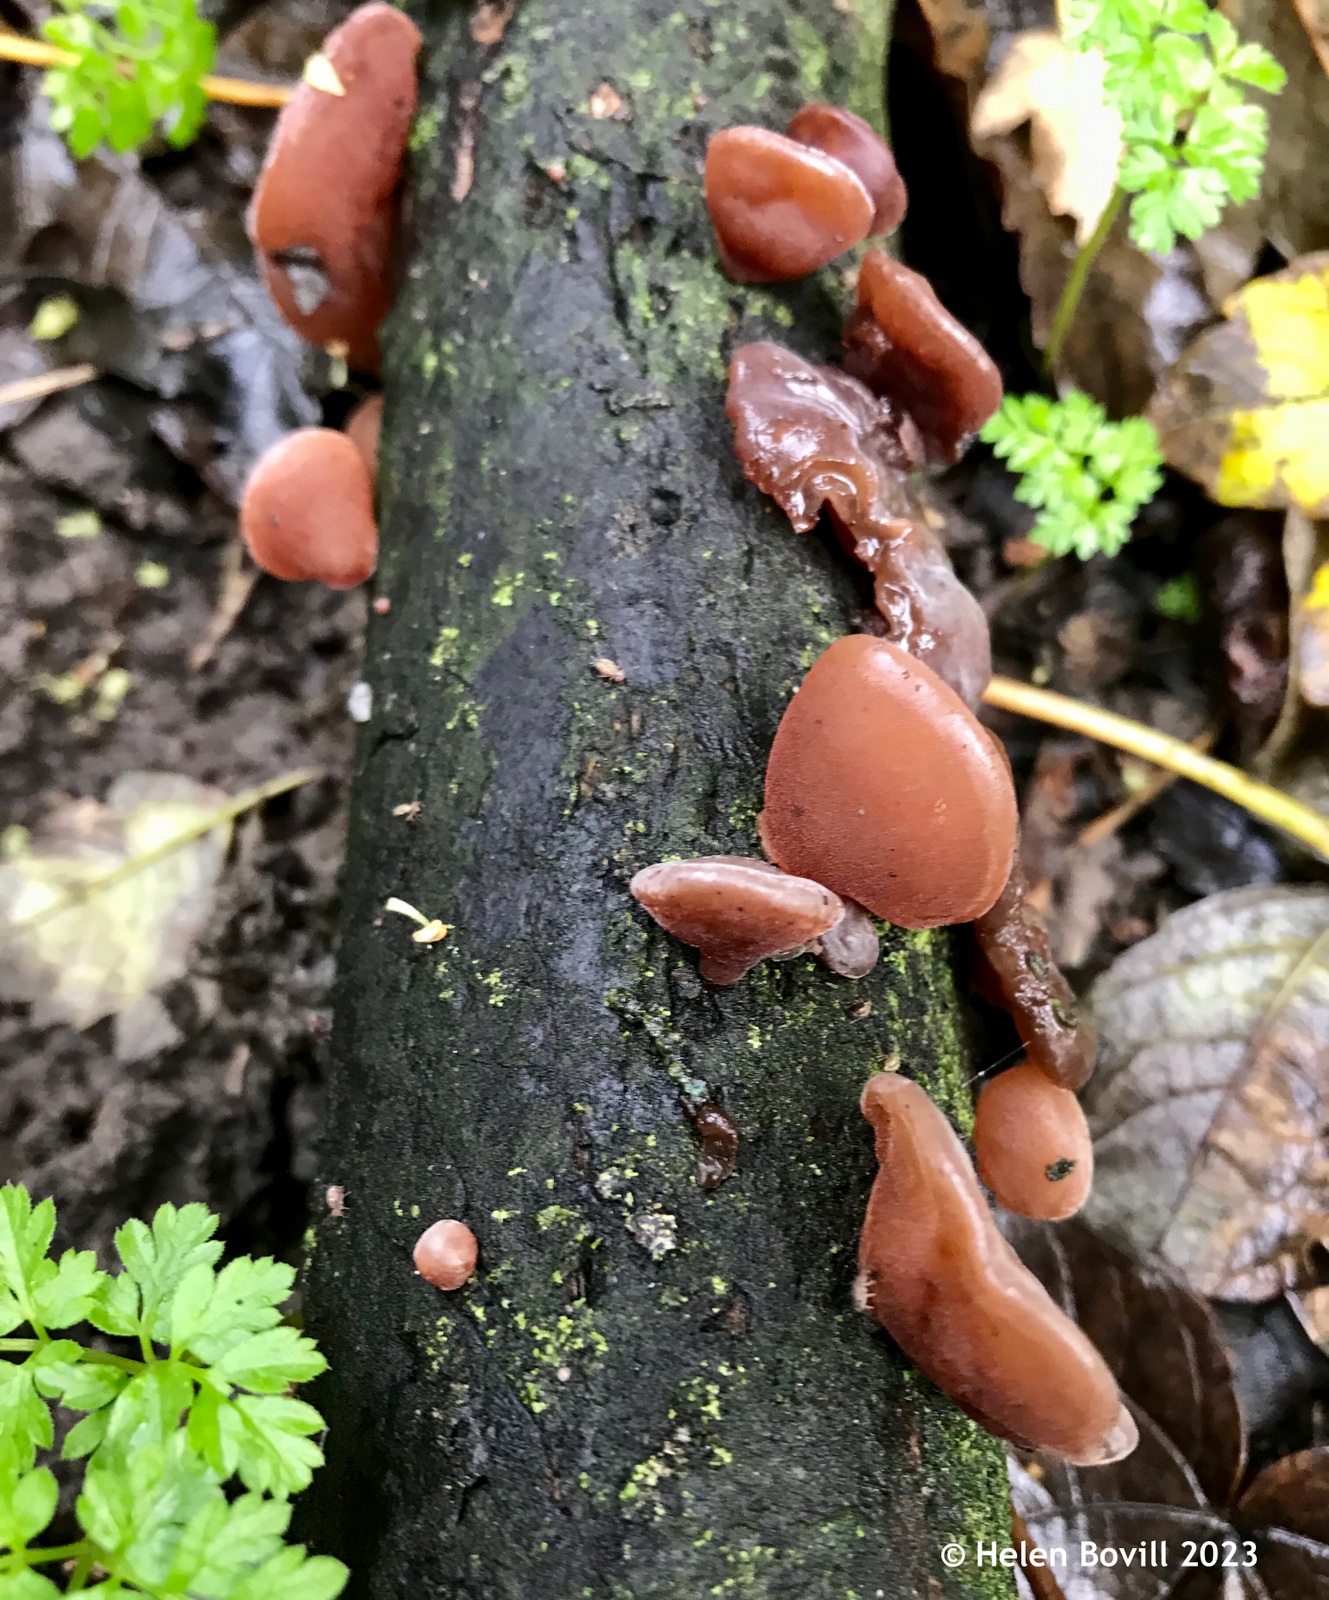 Jelly Ear Fungus growing on a rotting fallen branch